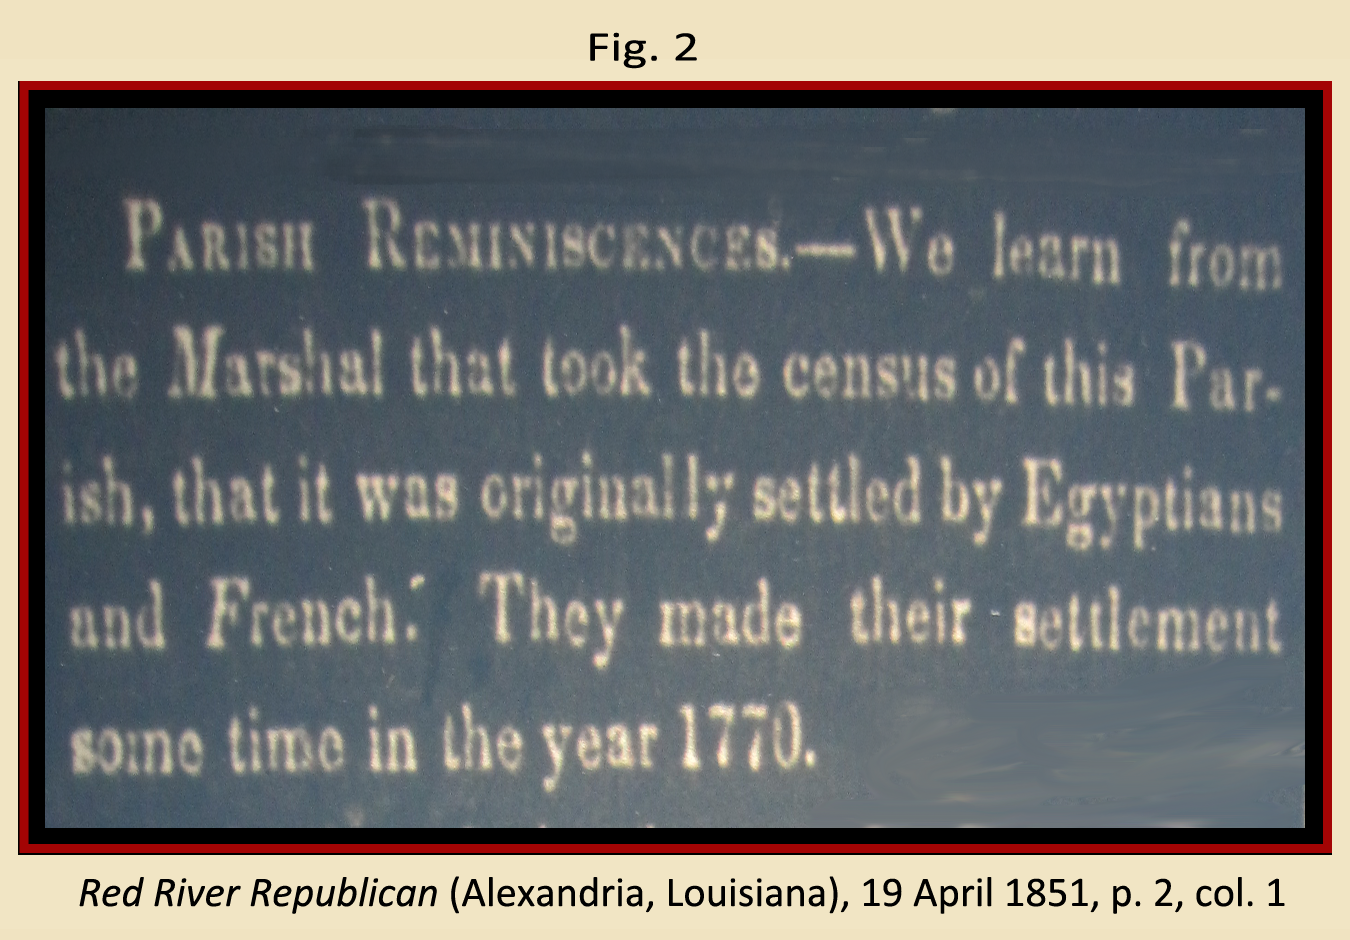 1850 newspaper filler claiming settlement by Egyptians